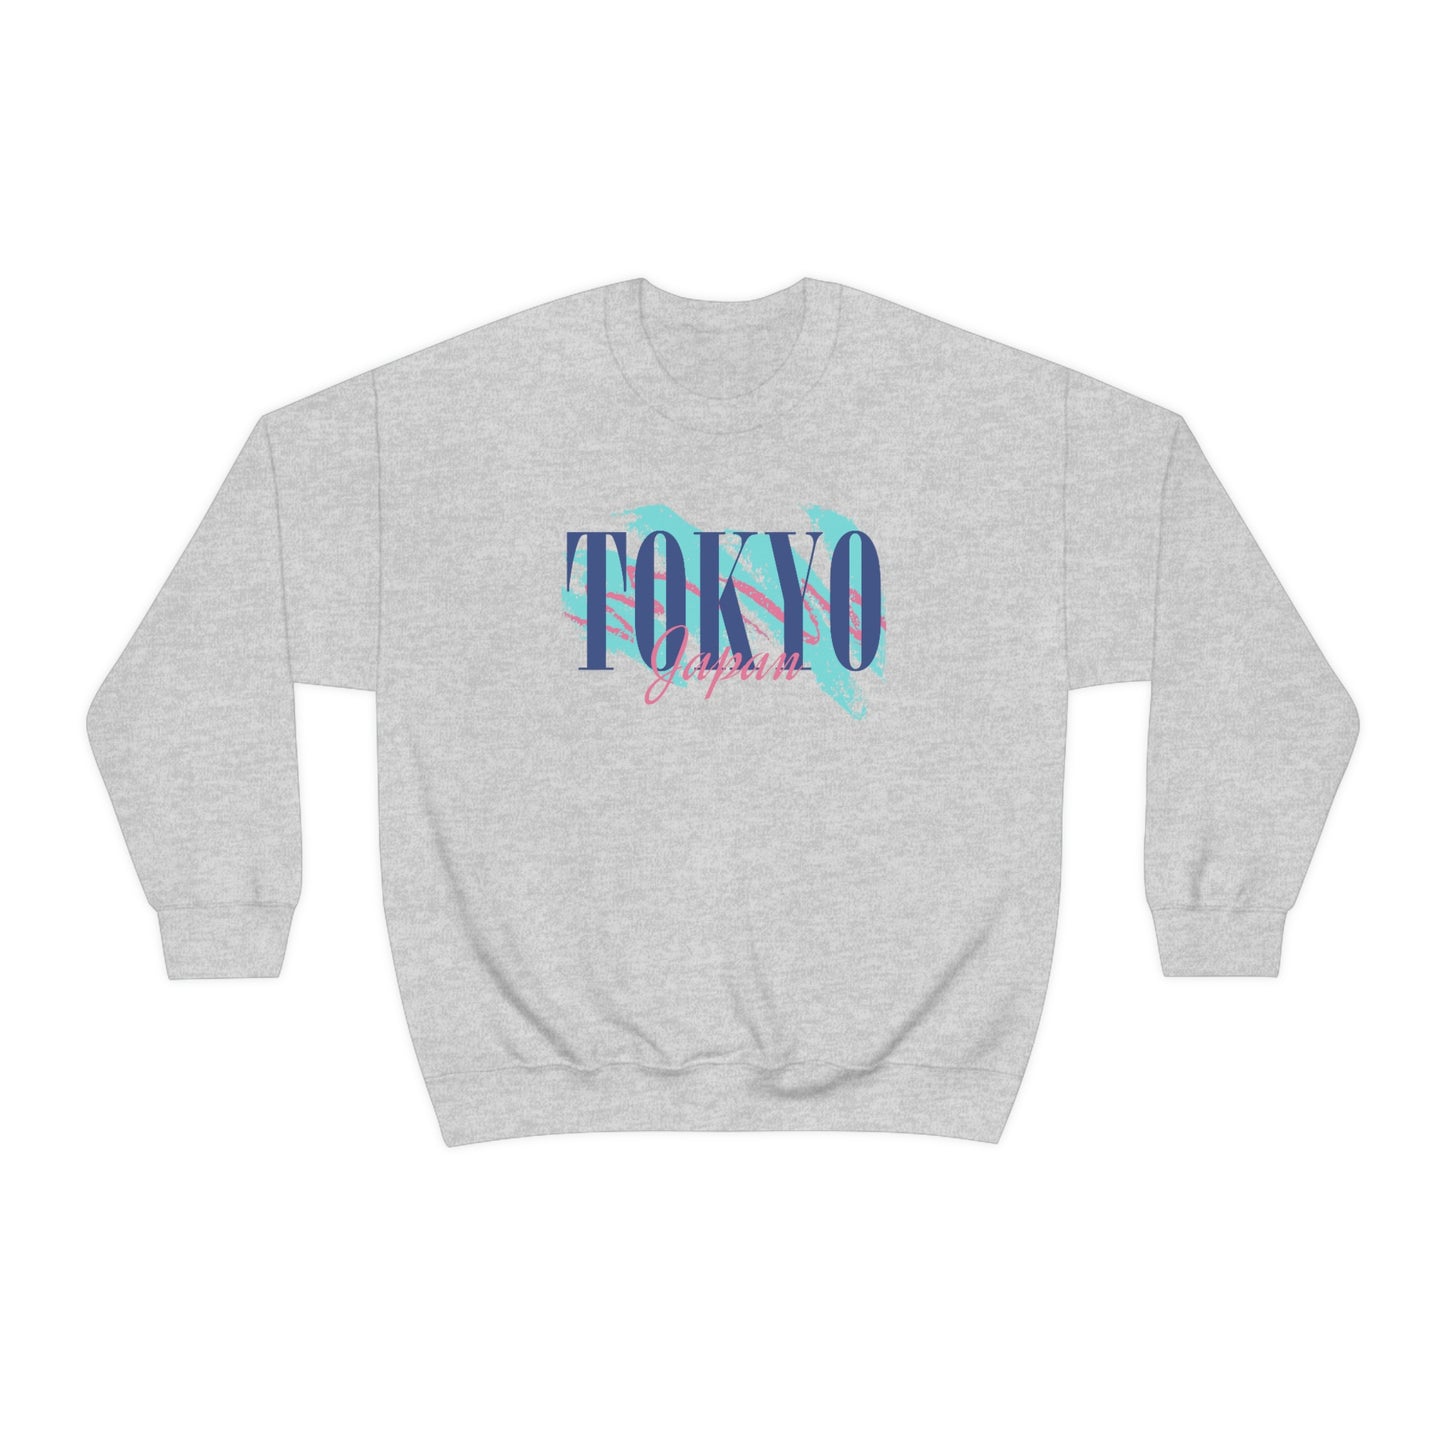 Tokyo Signature Sweatshirt Tokyo Japan Crewneck Retro Style Sweatshirt Vintage Inspired Sweater